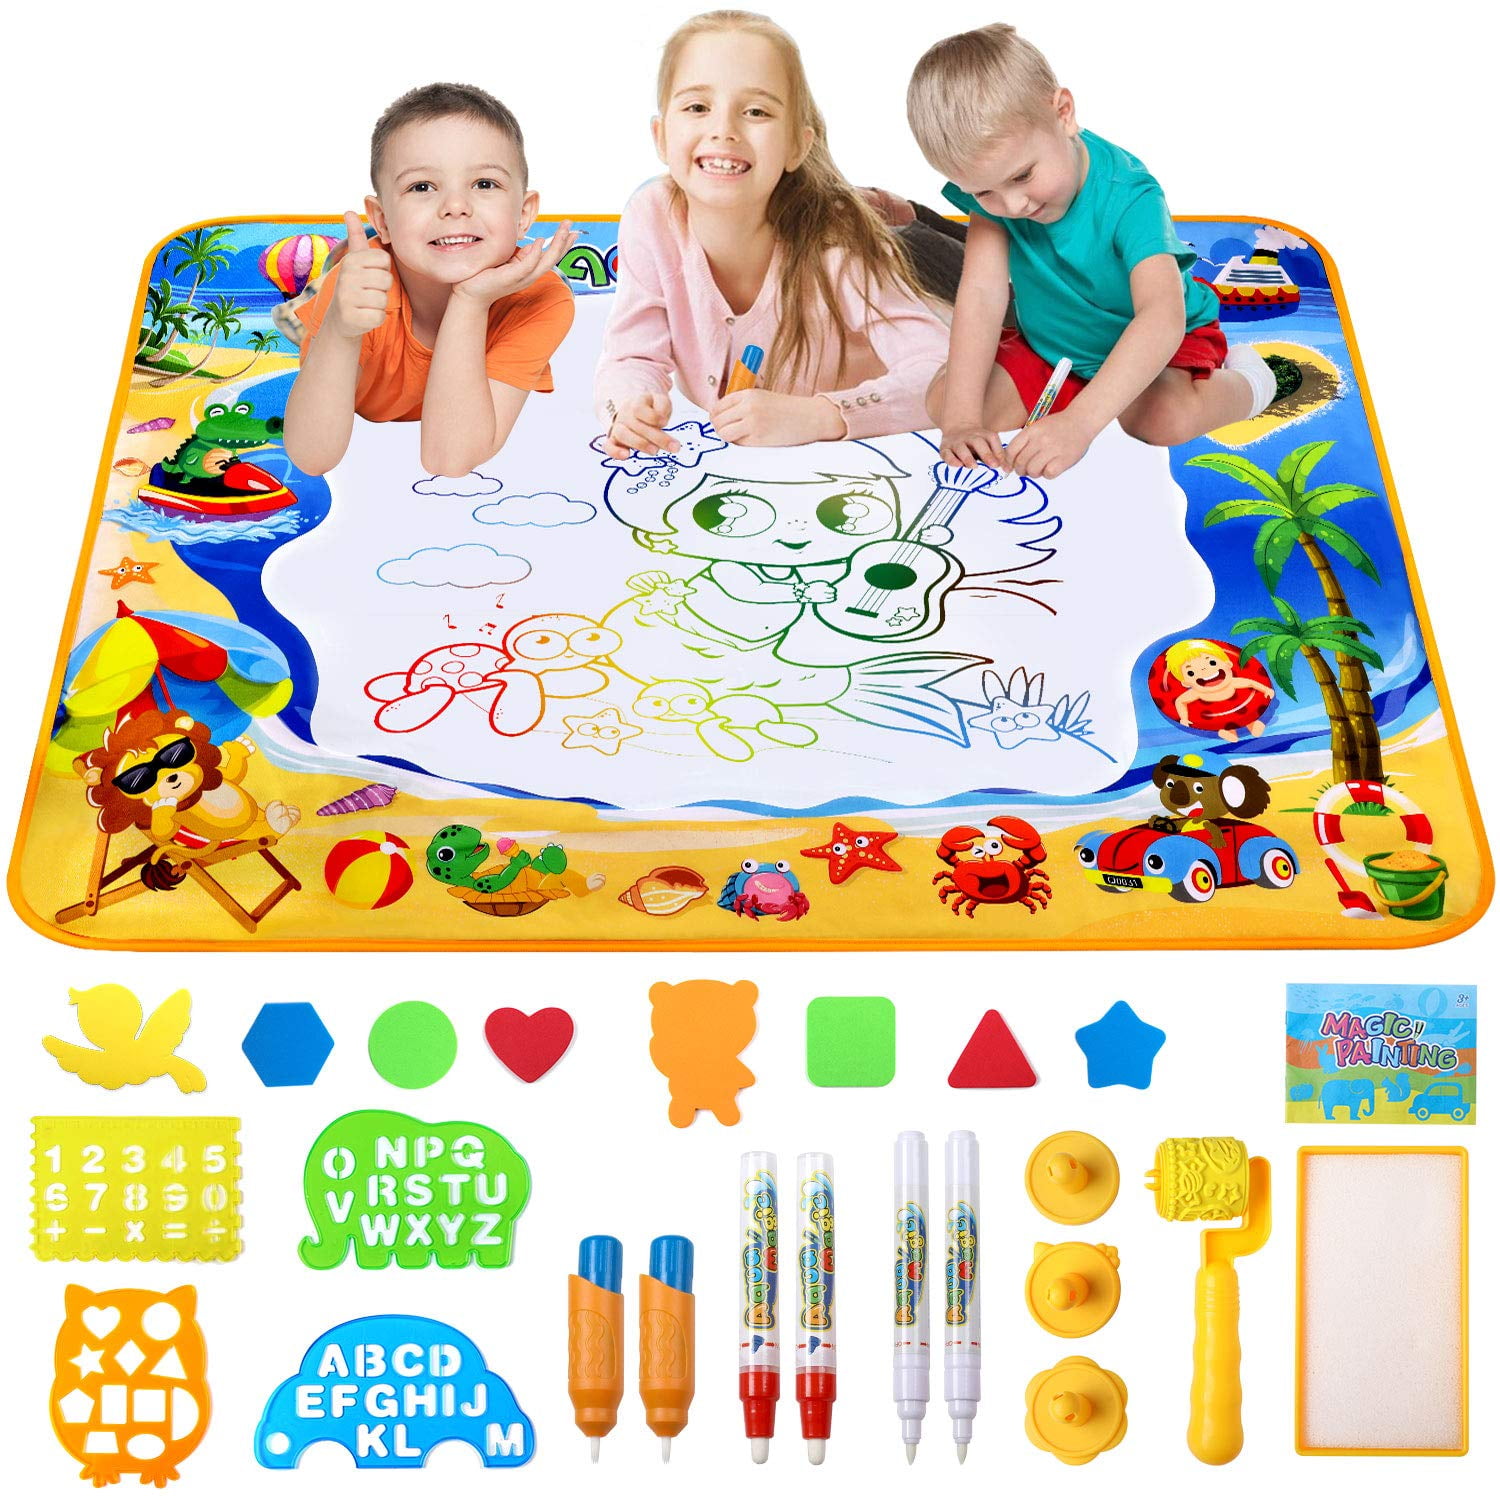 Magic Drawing Water Pen Painting Doodle Mat Board Kids Painting Toy GZJP W0DE HN 